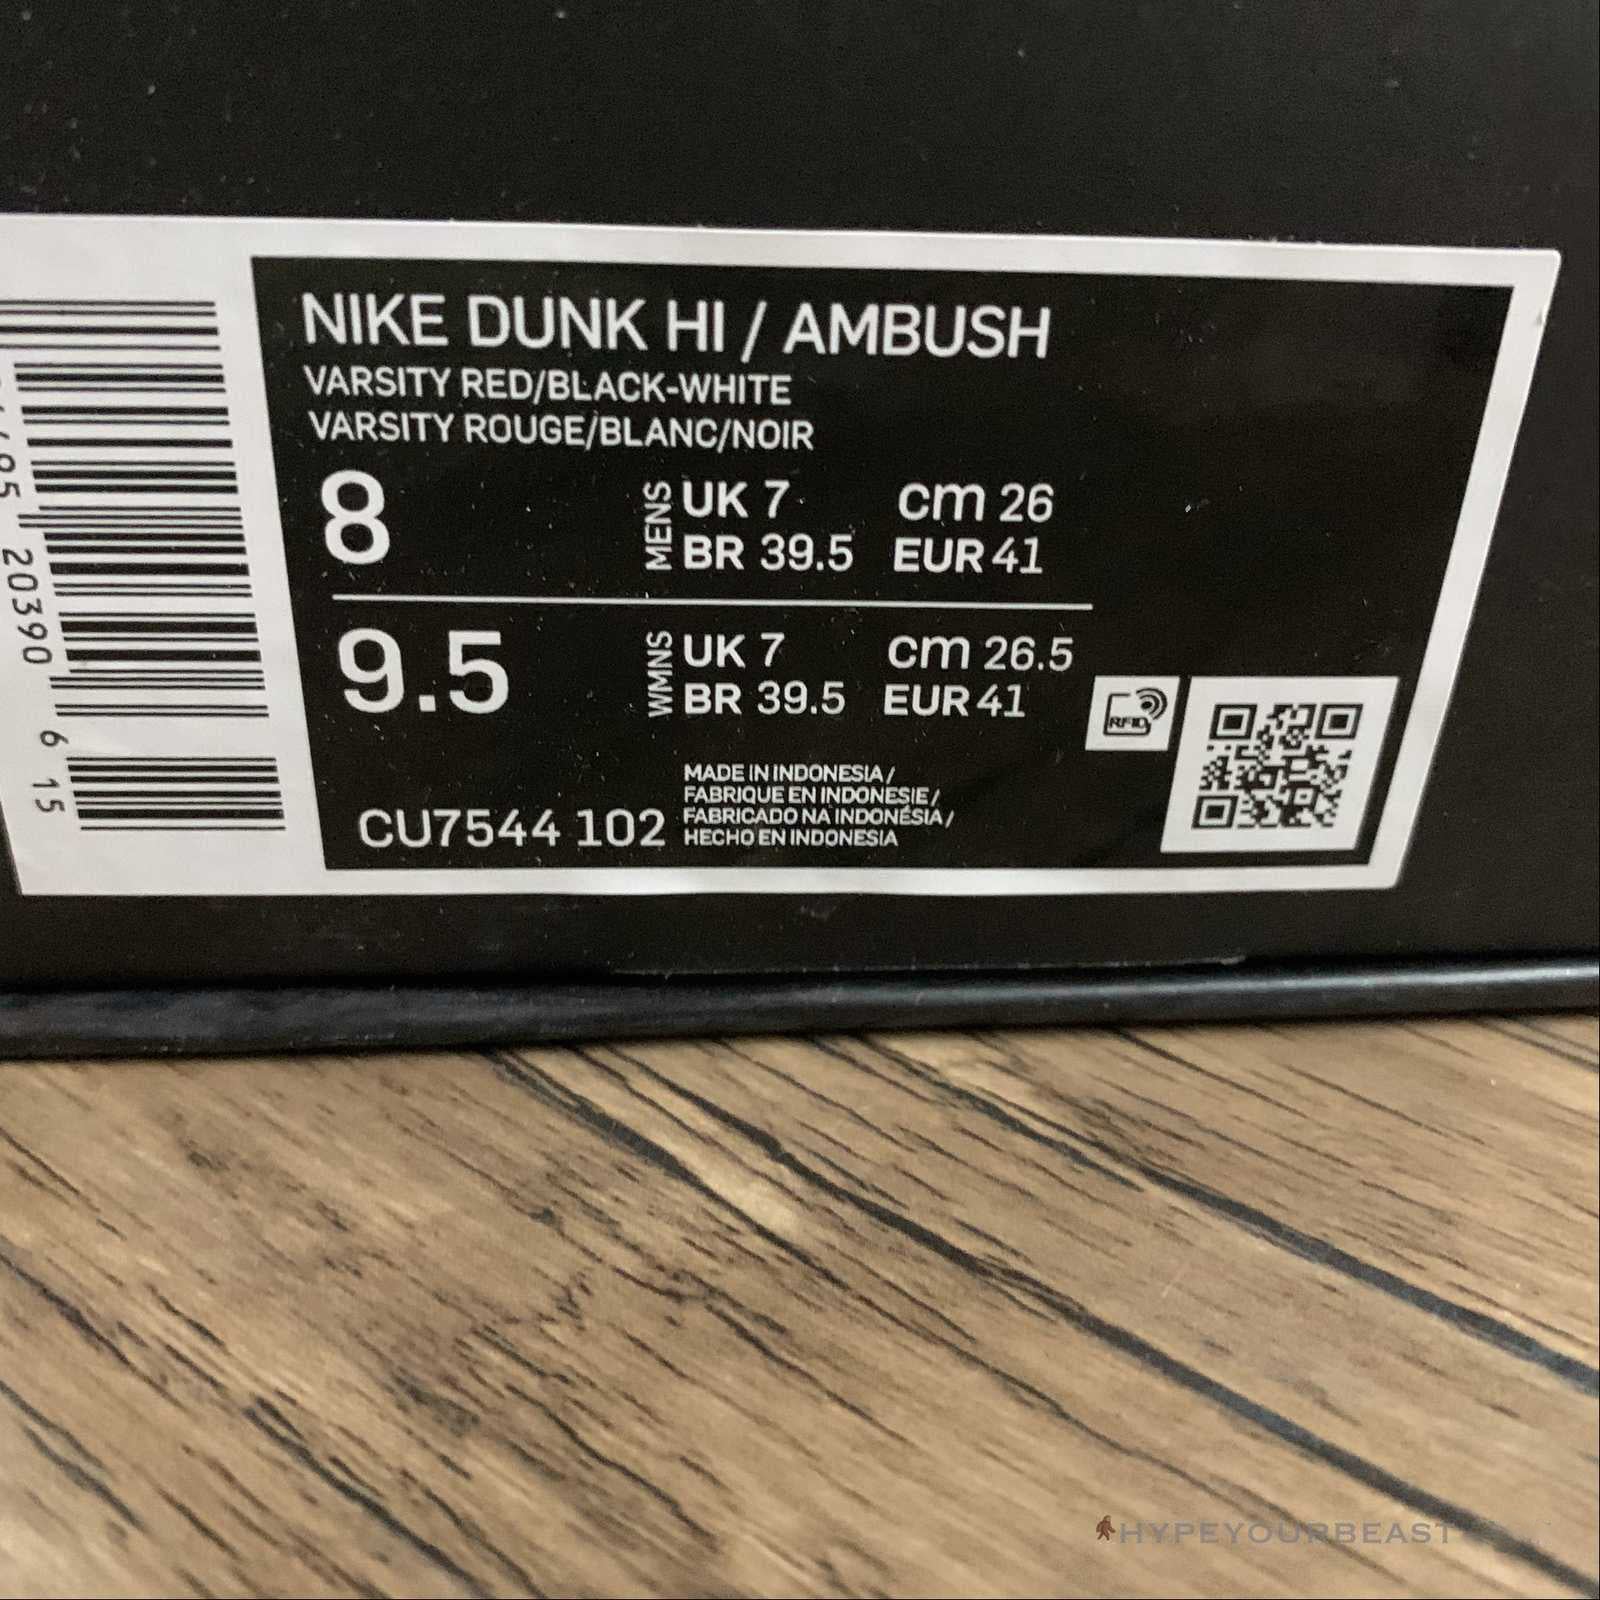 AMBUSH x Nike Dunk High 'Chicago'